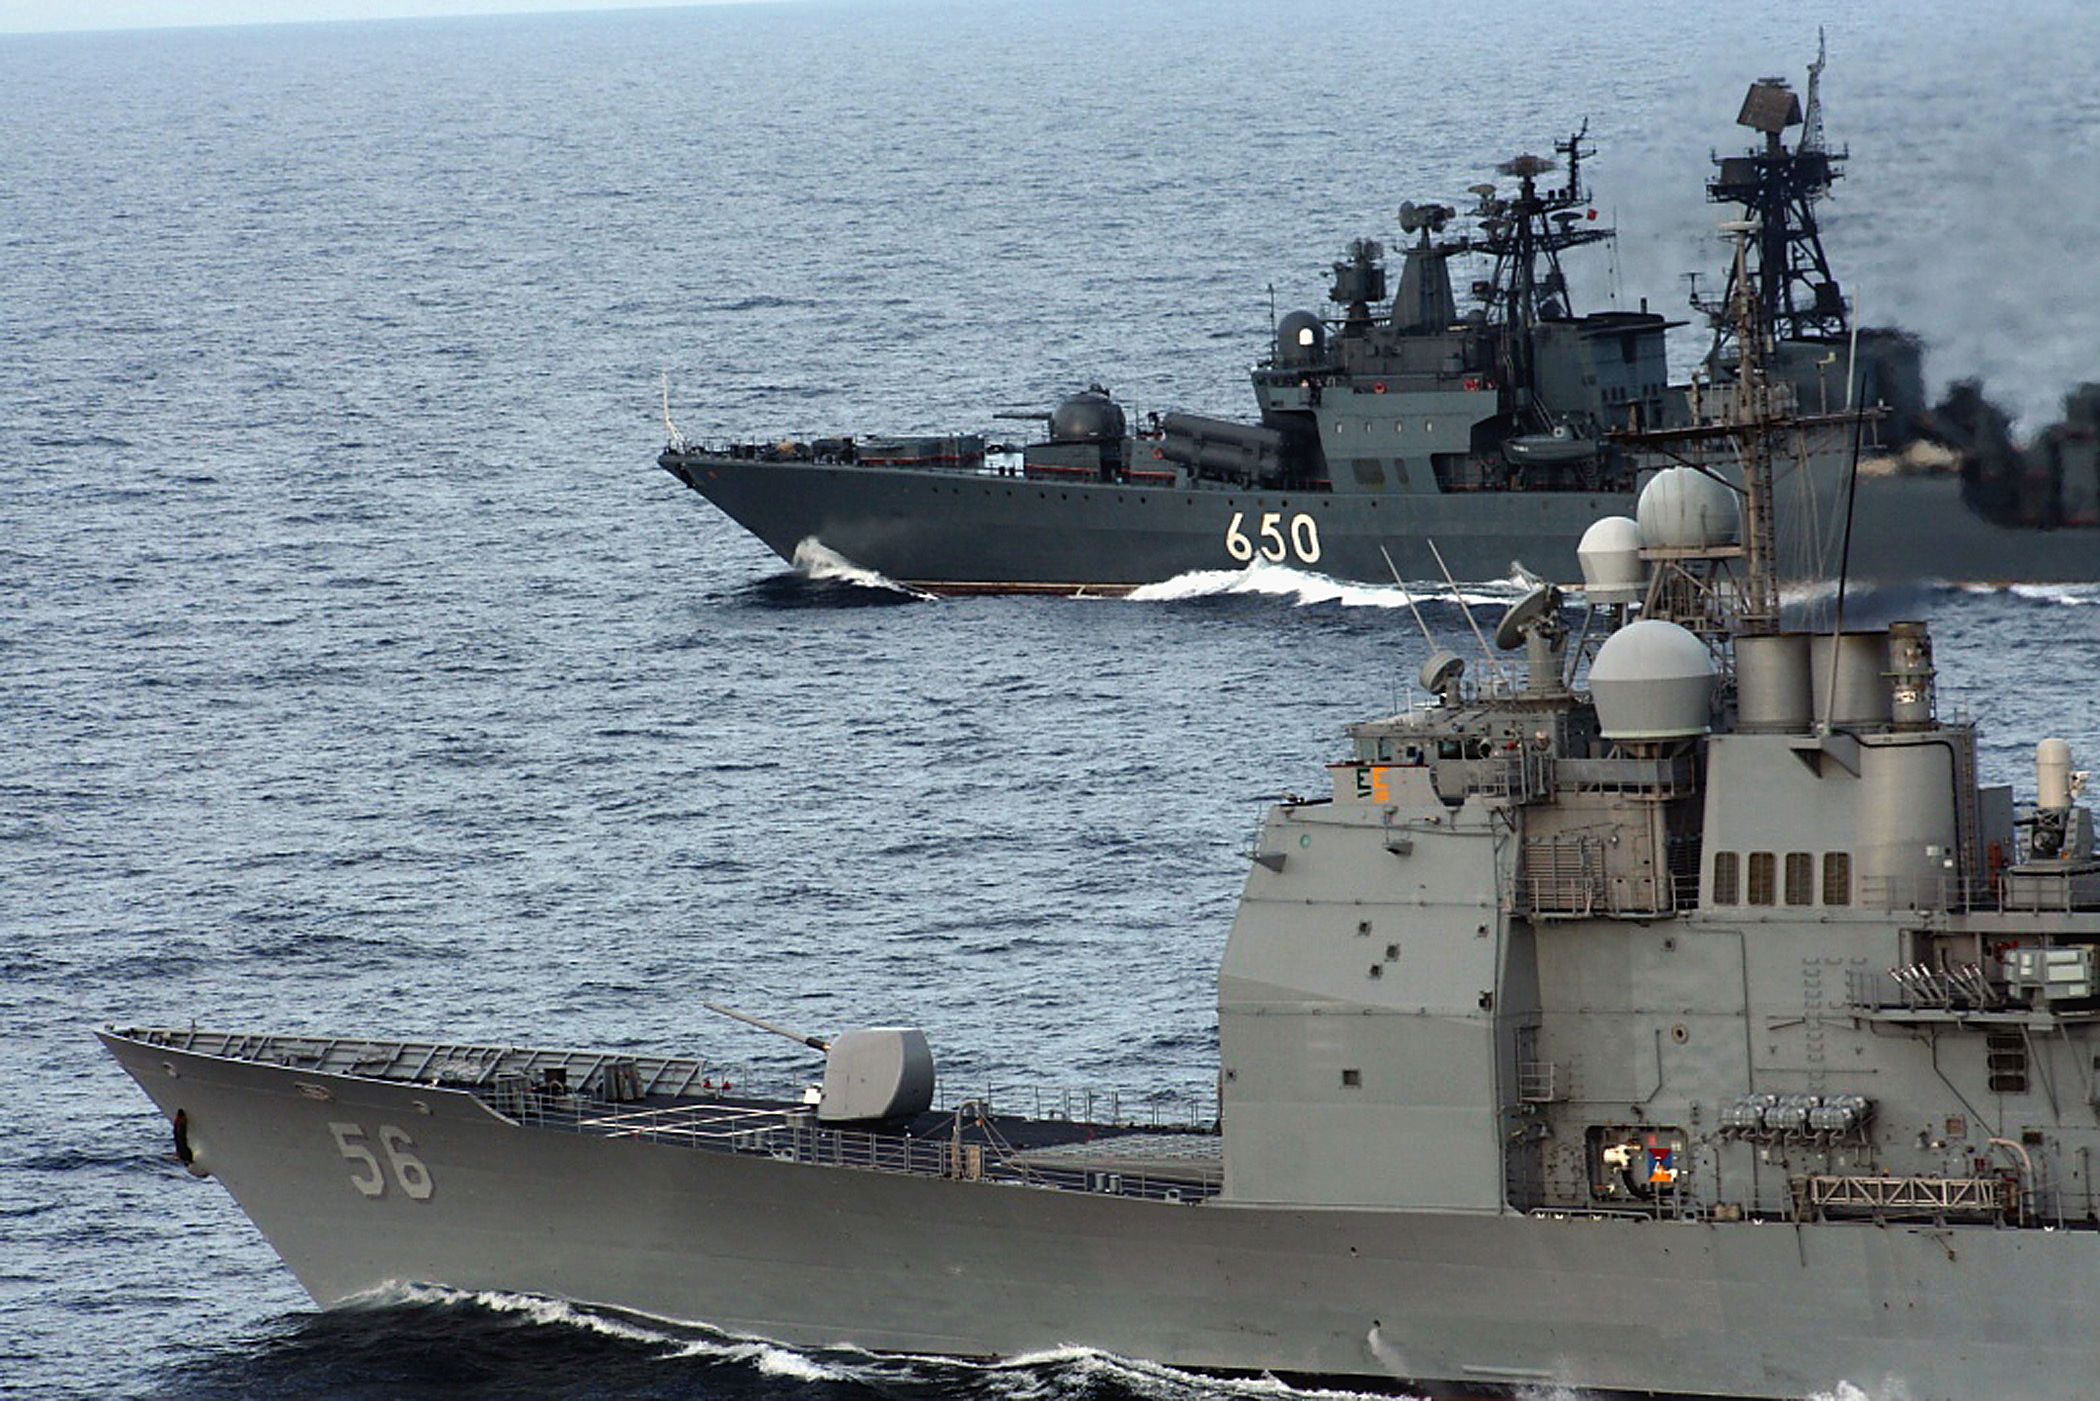 Russian warships off the Taiwan’s coast?